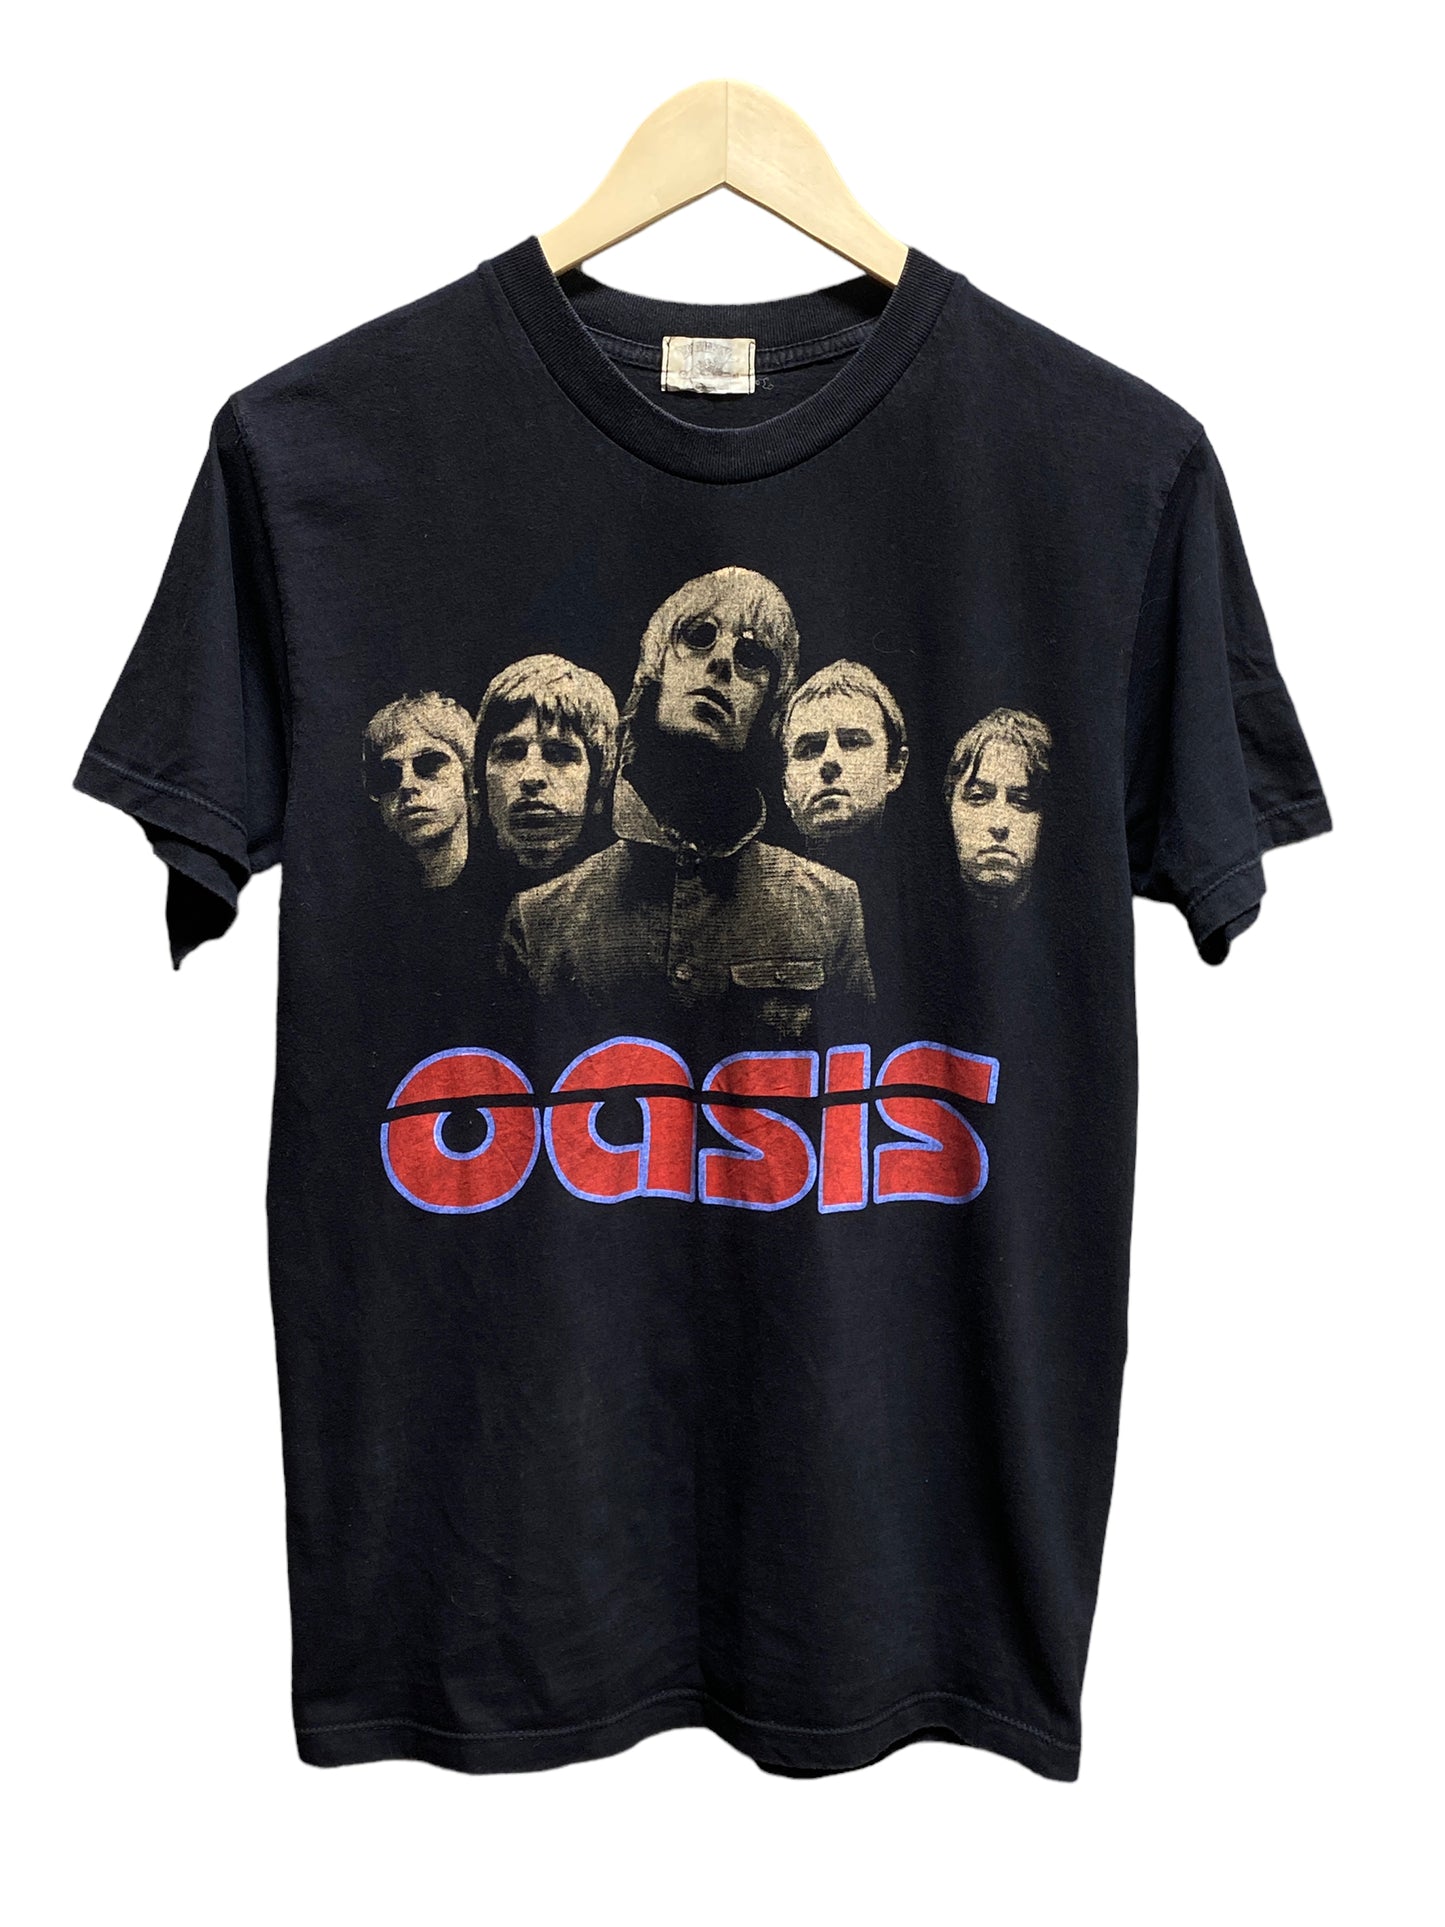 Vintage 90's Oasis Band Portrait Tee Size Medium